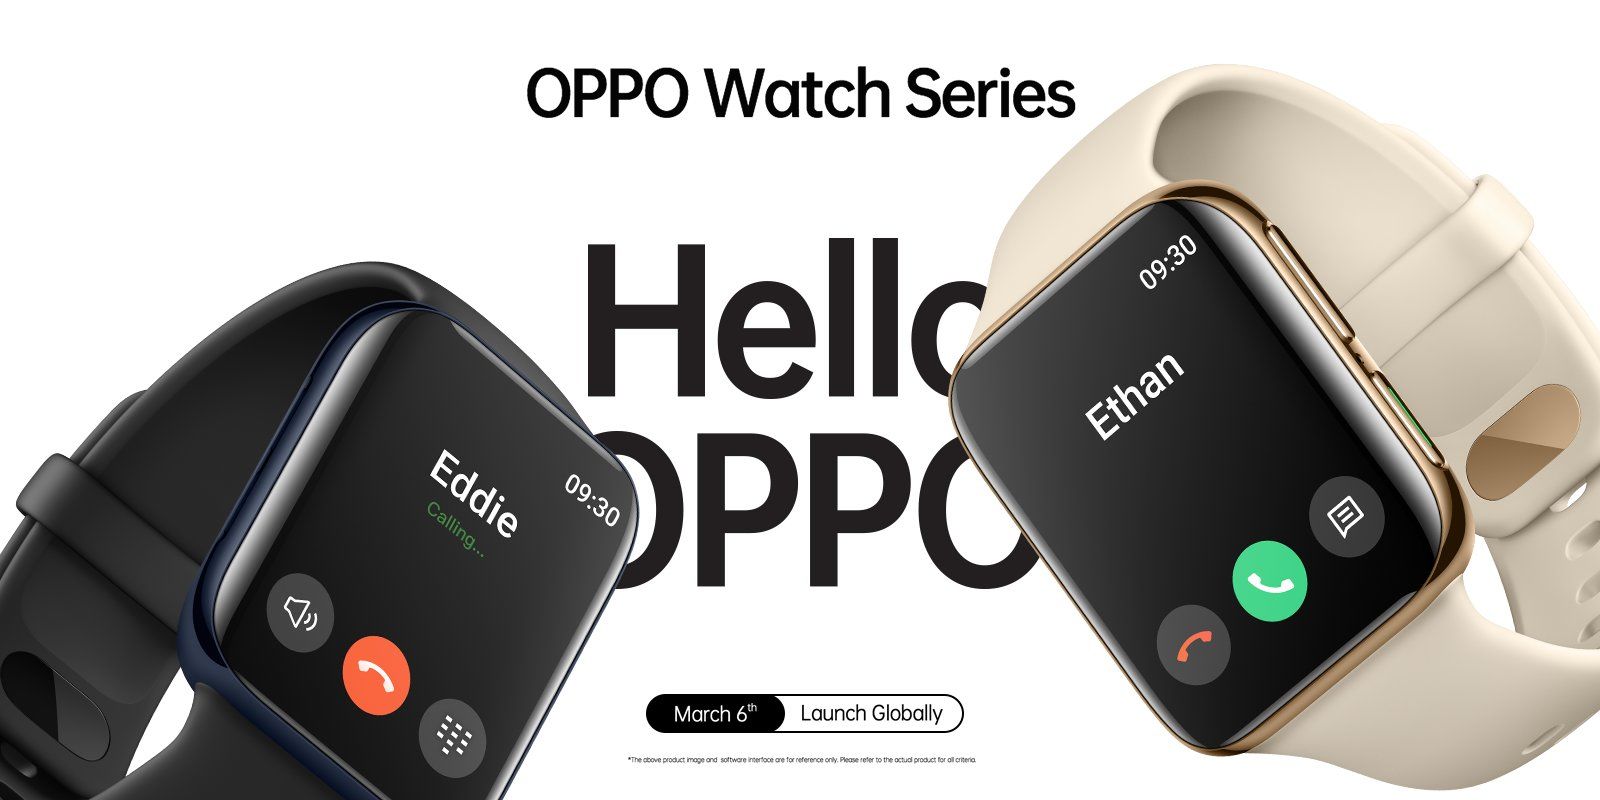 OPPO、Apple Watch似のOPPO Watchを予告。3月6日にグローバル発表